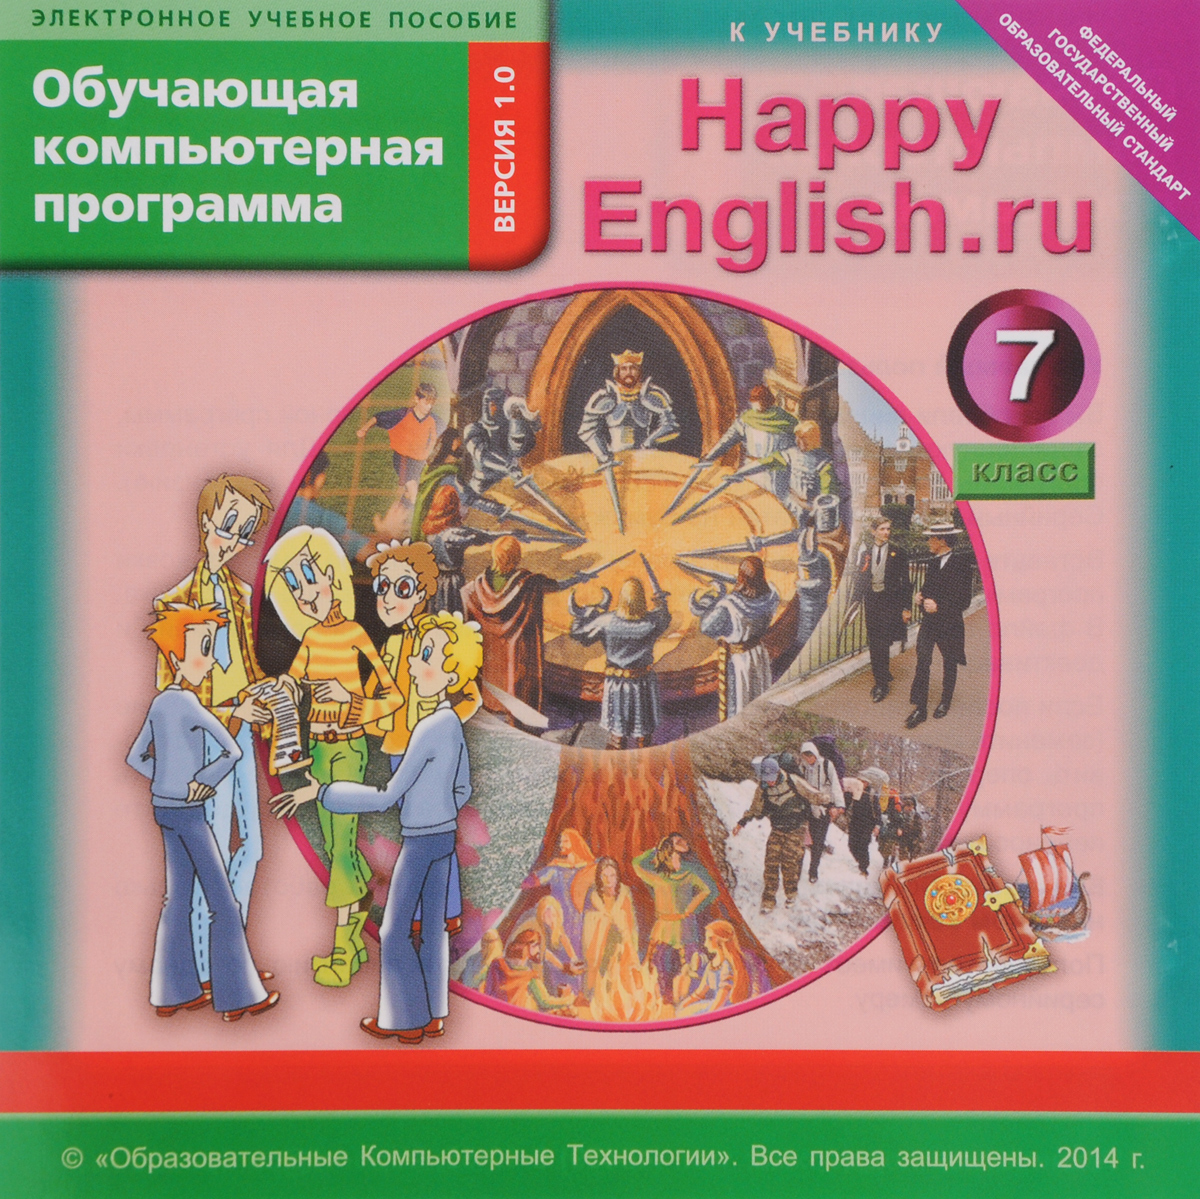 New english ru. Happy English учебник. Хэппи Инглиш. Happy English игра на компьютер. Happy English картинка.